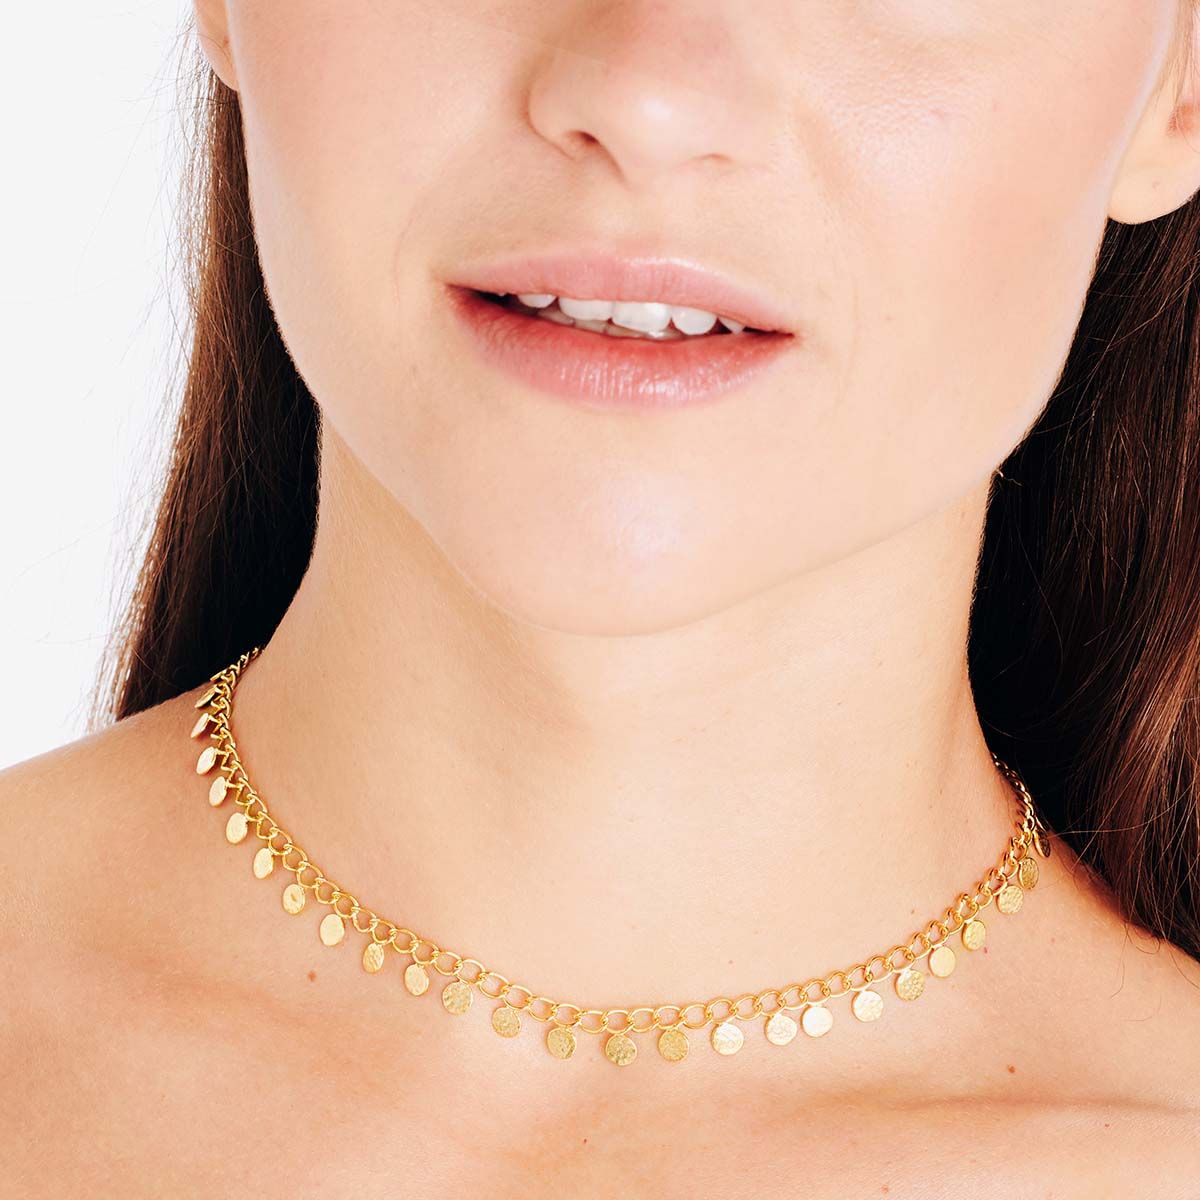 Coin necklace - Halsketten - 18k vergoldet